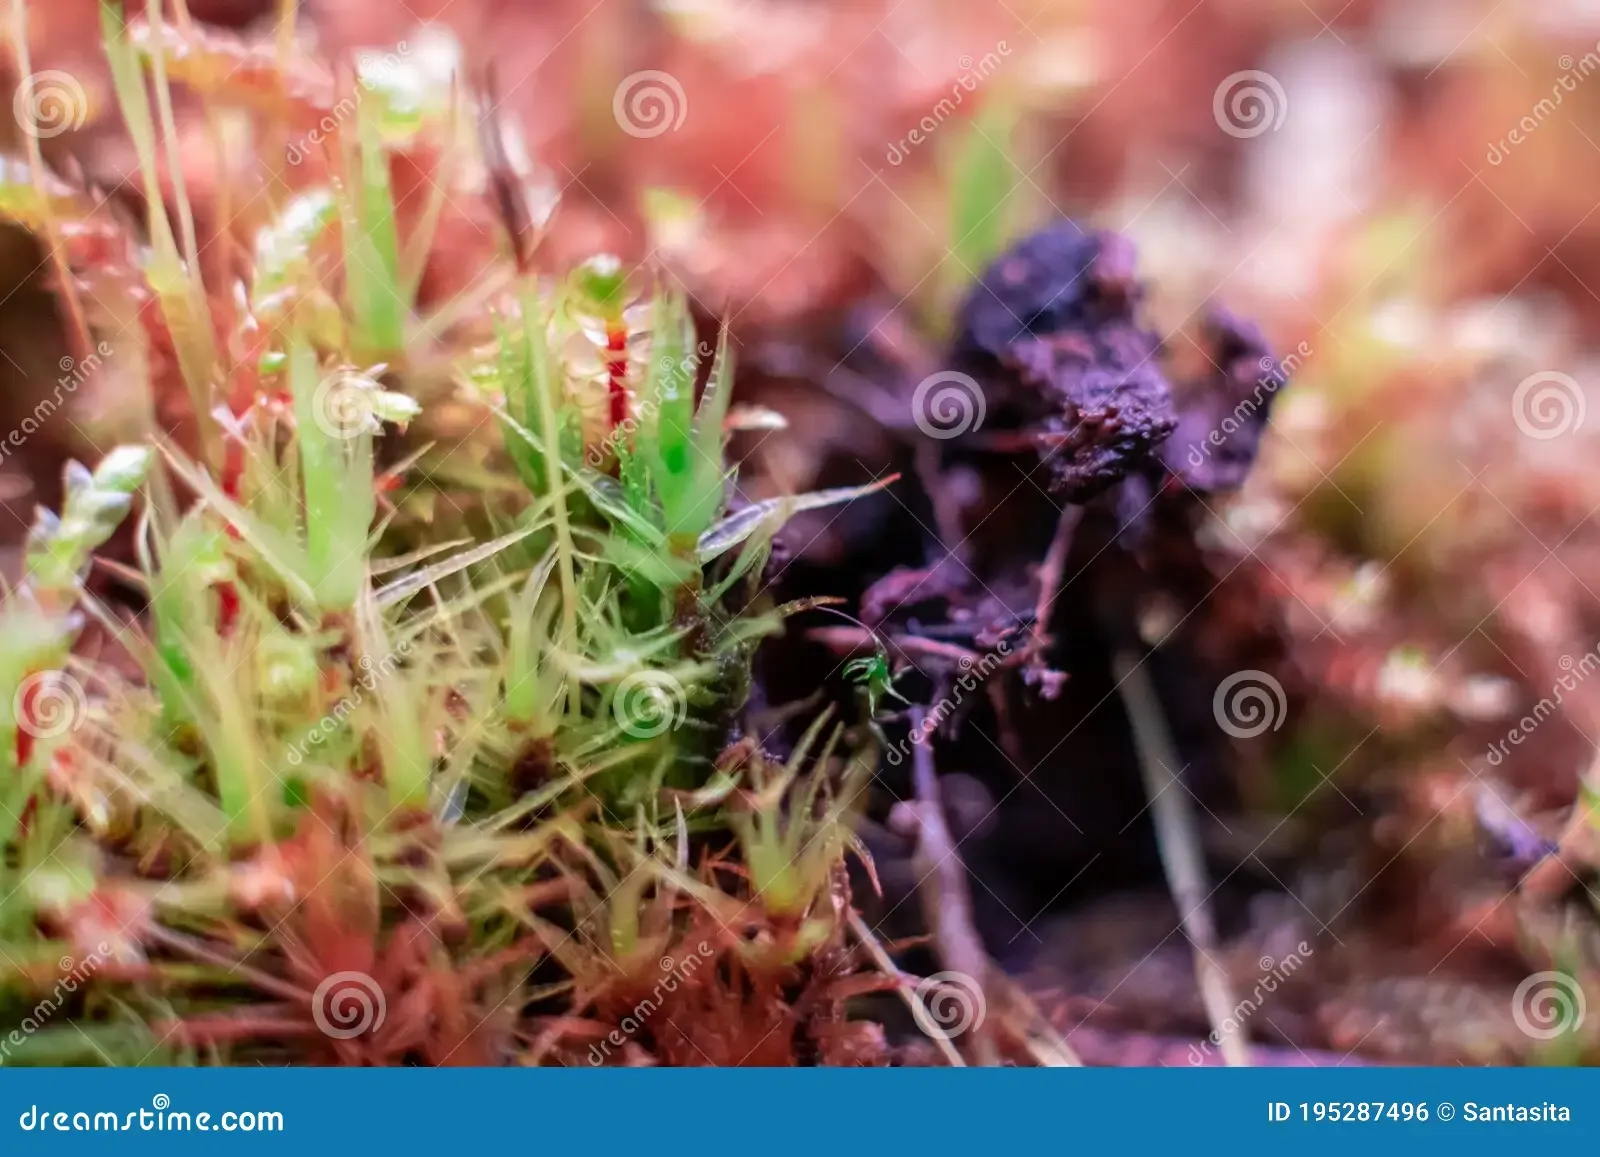 macro-bryum-moss-pohlia-nutans-dew-drops-forest-floor-over-dark-green-background-mossy-plants-mosses-195287496.jpg